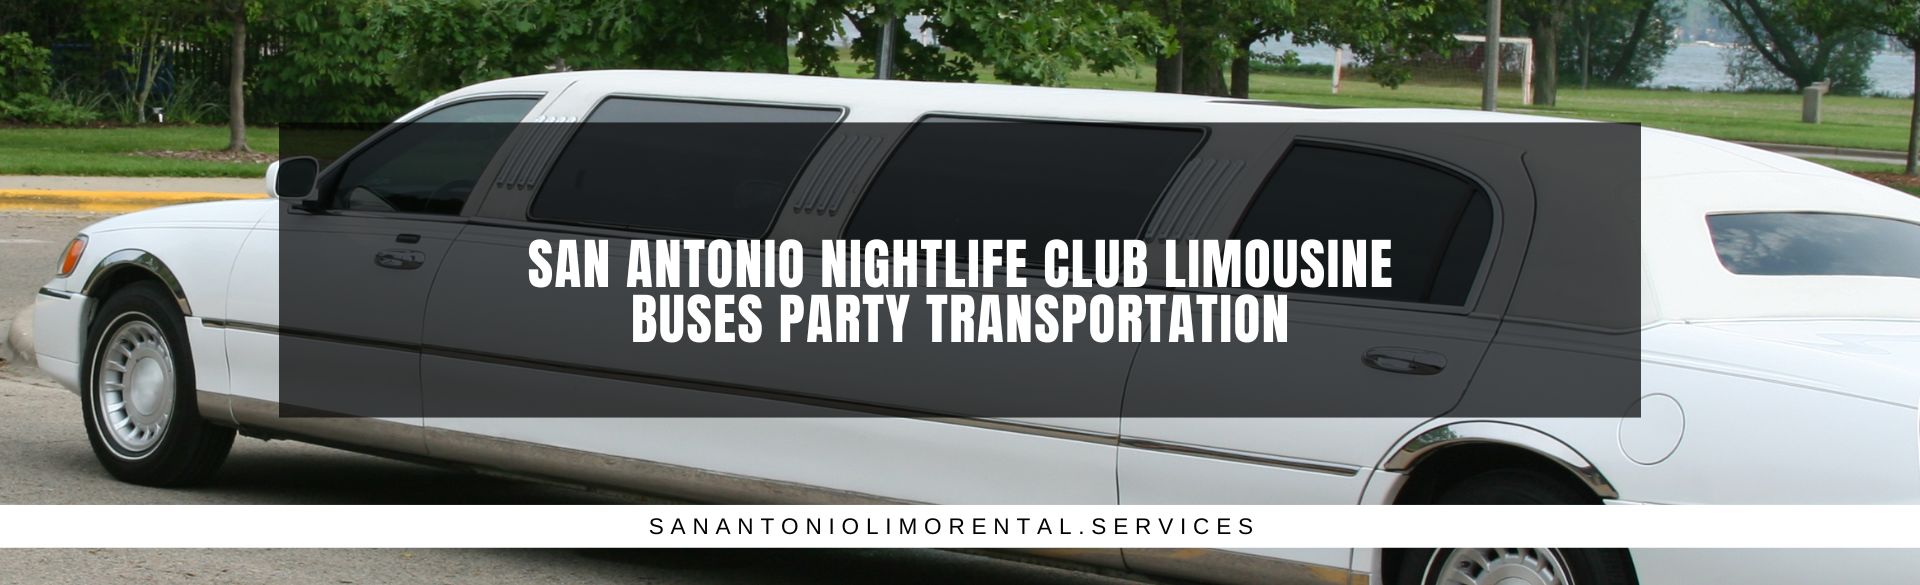 San Antonio Nightlife Club Limousine Buses Party Transportation